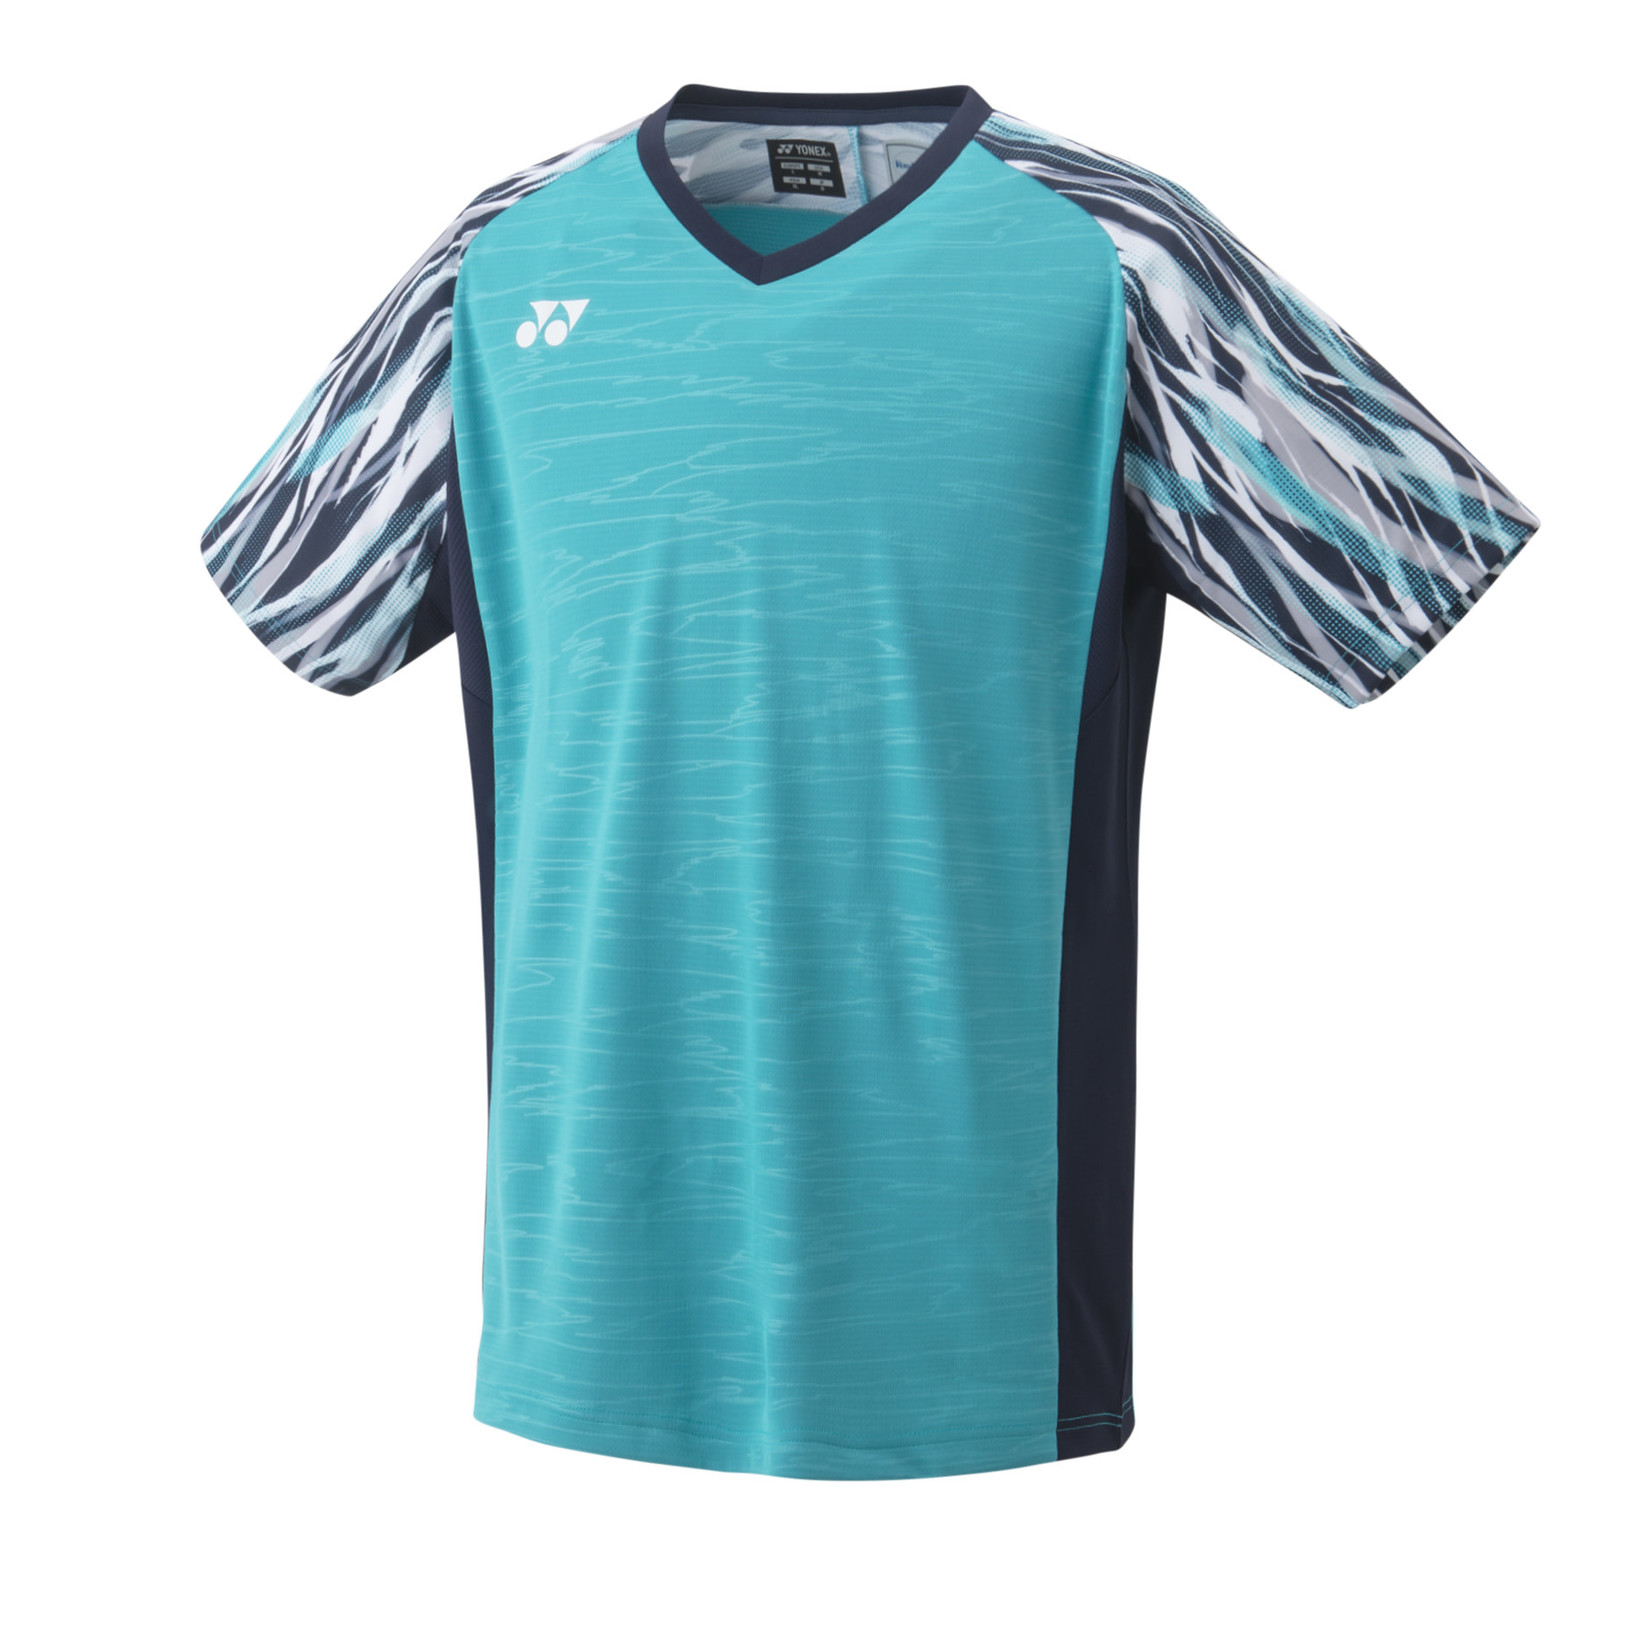 Yonex Yonex Shirt 10443EX Turquoise